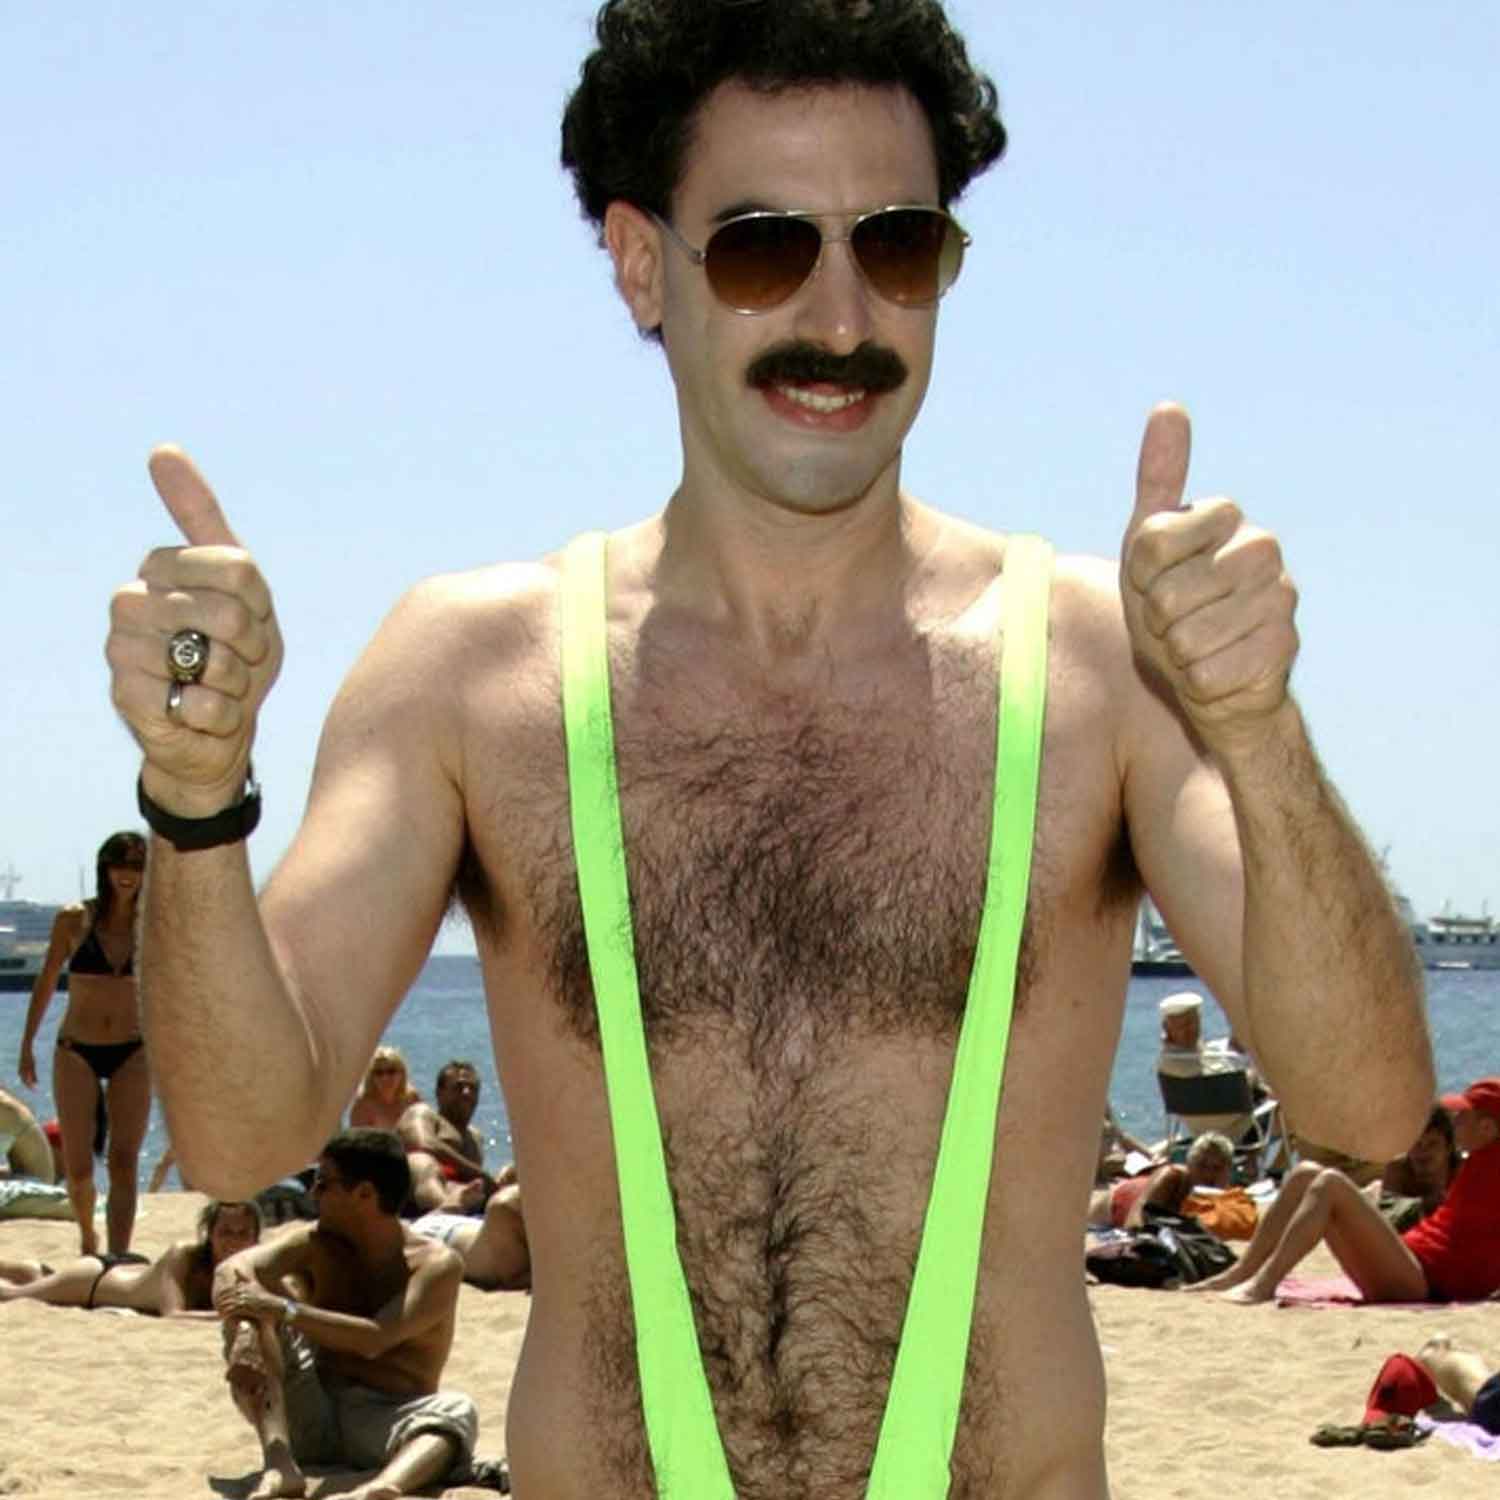 MySpace Users Get Sneak Preview Of The New Sacha Baron Cohen Film 'Borat'